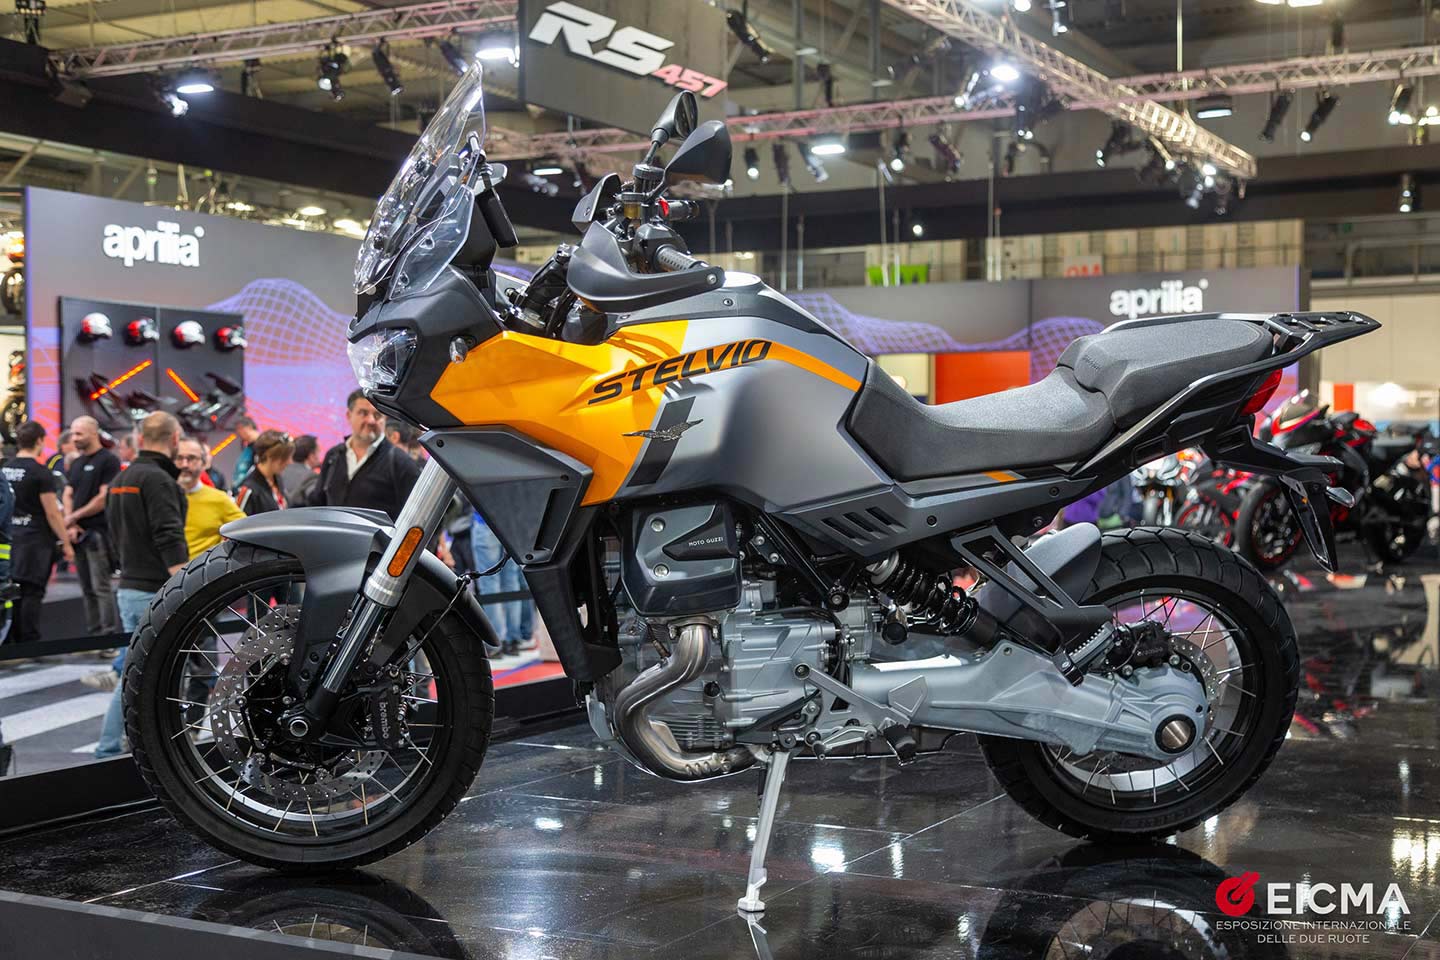 Moto Guzzi Stelvio 1000: price, consumption, colors